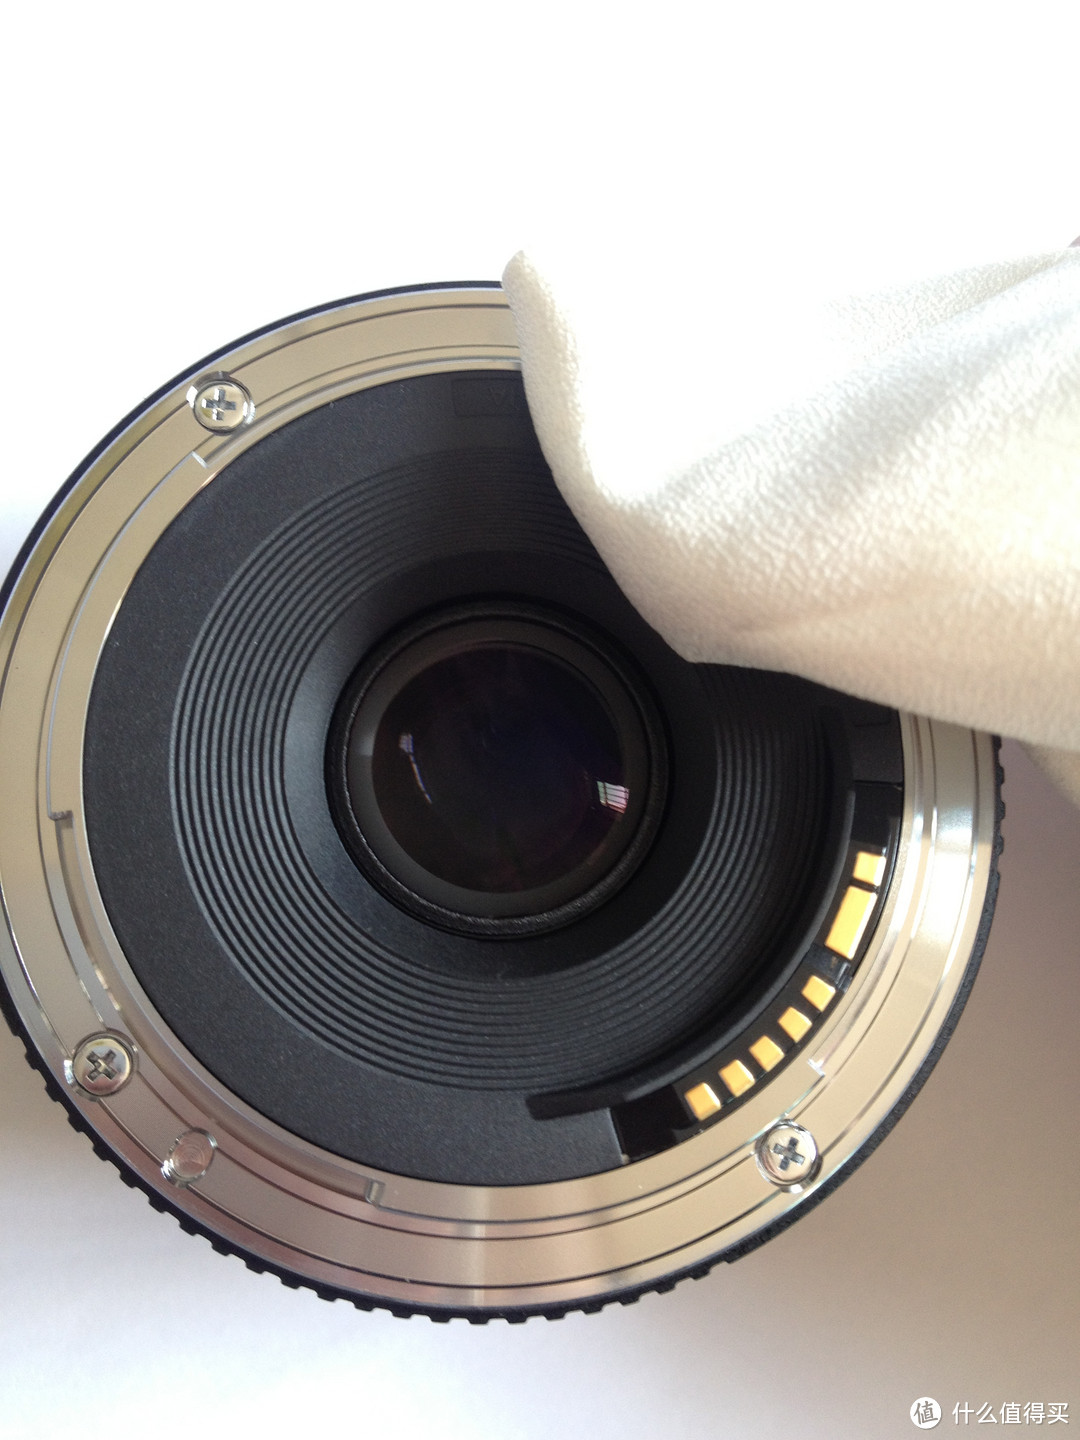 VSGO 威高 D-10150 单反相机便携清洁布评测报告